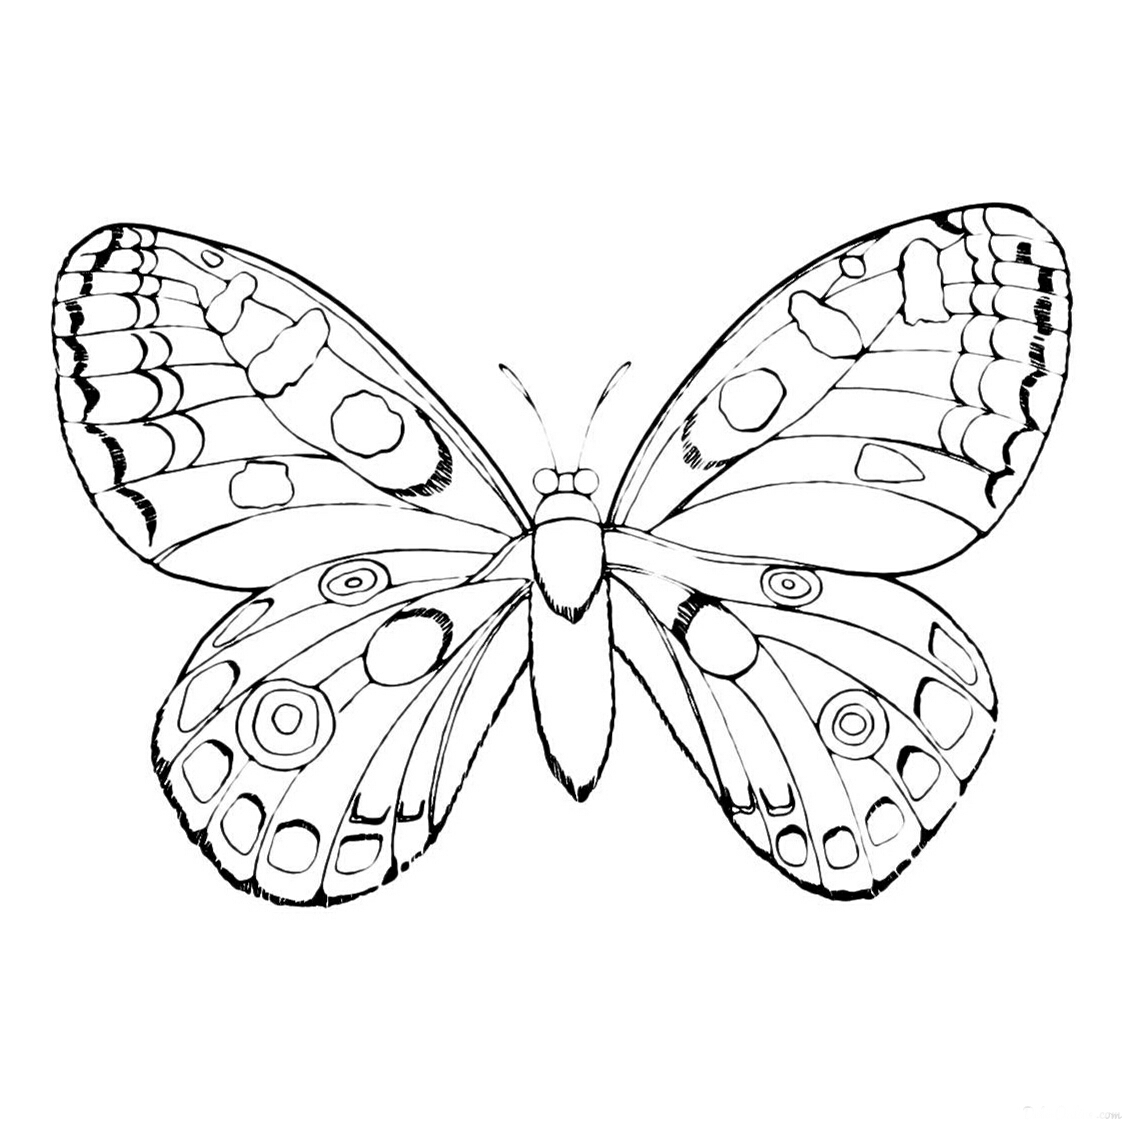 kelebekler-5